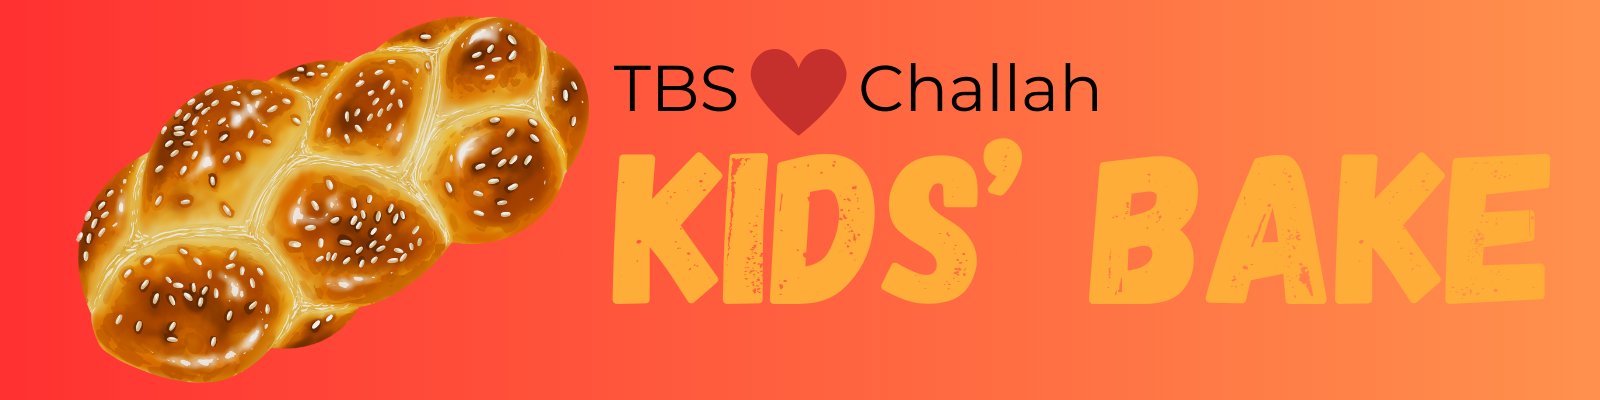 TBS <3 CHALLAH - KIDS' BAKE